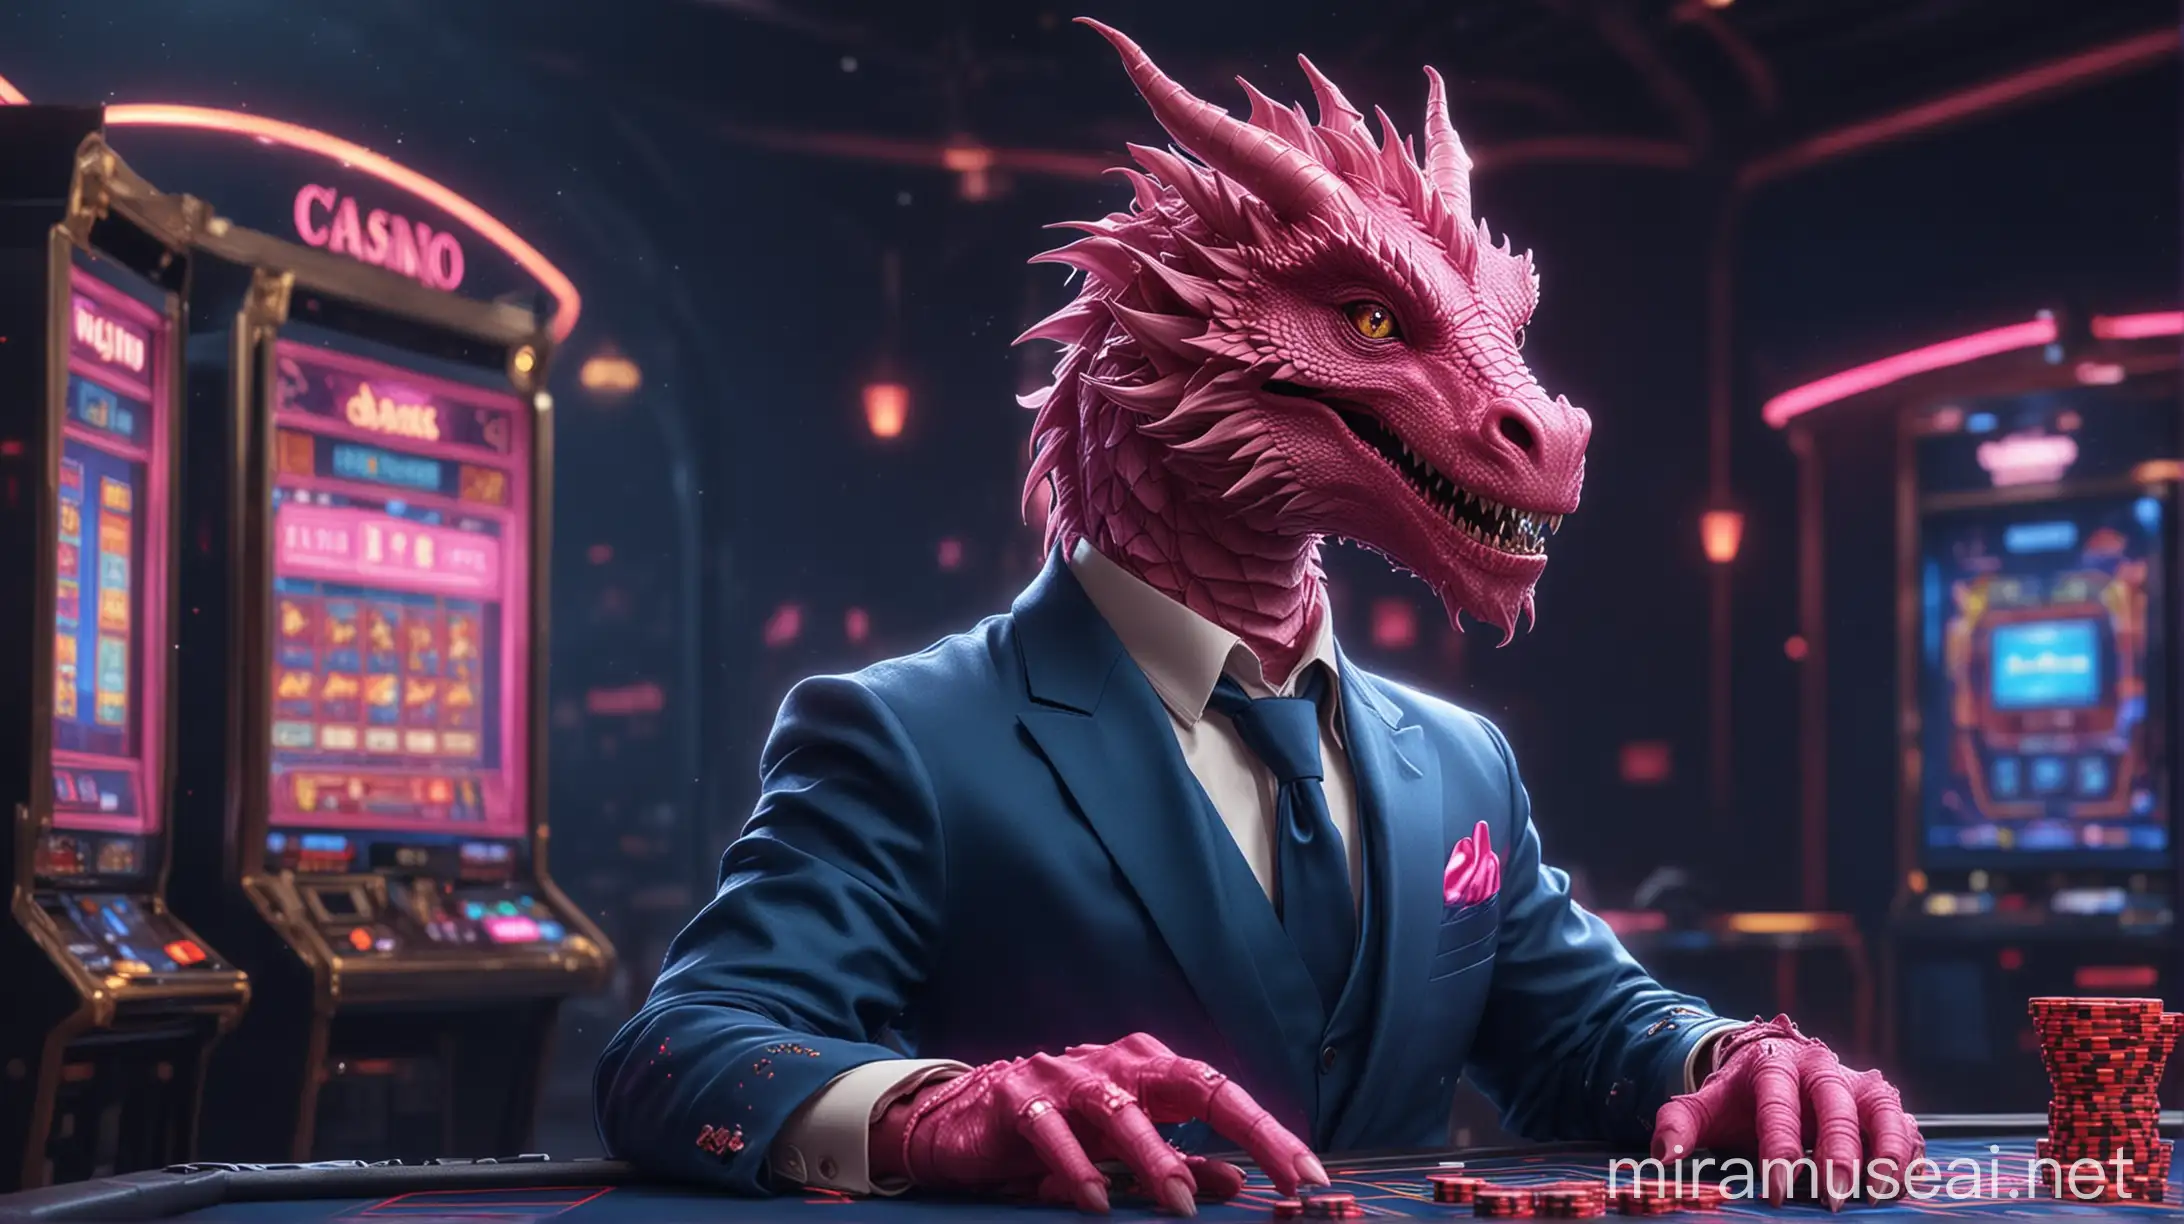 Futuristic Pink Aristocrat Dragon in Cosmic Casino Gambling